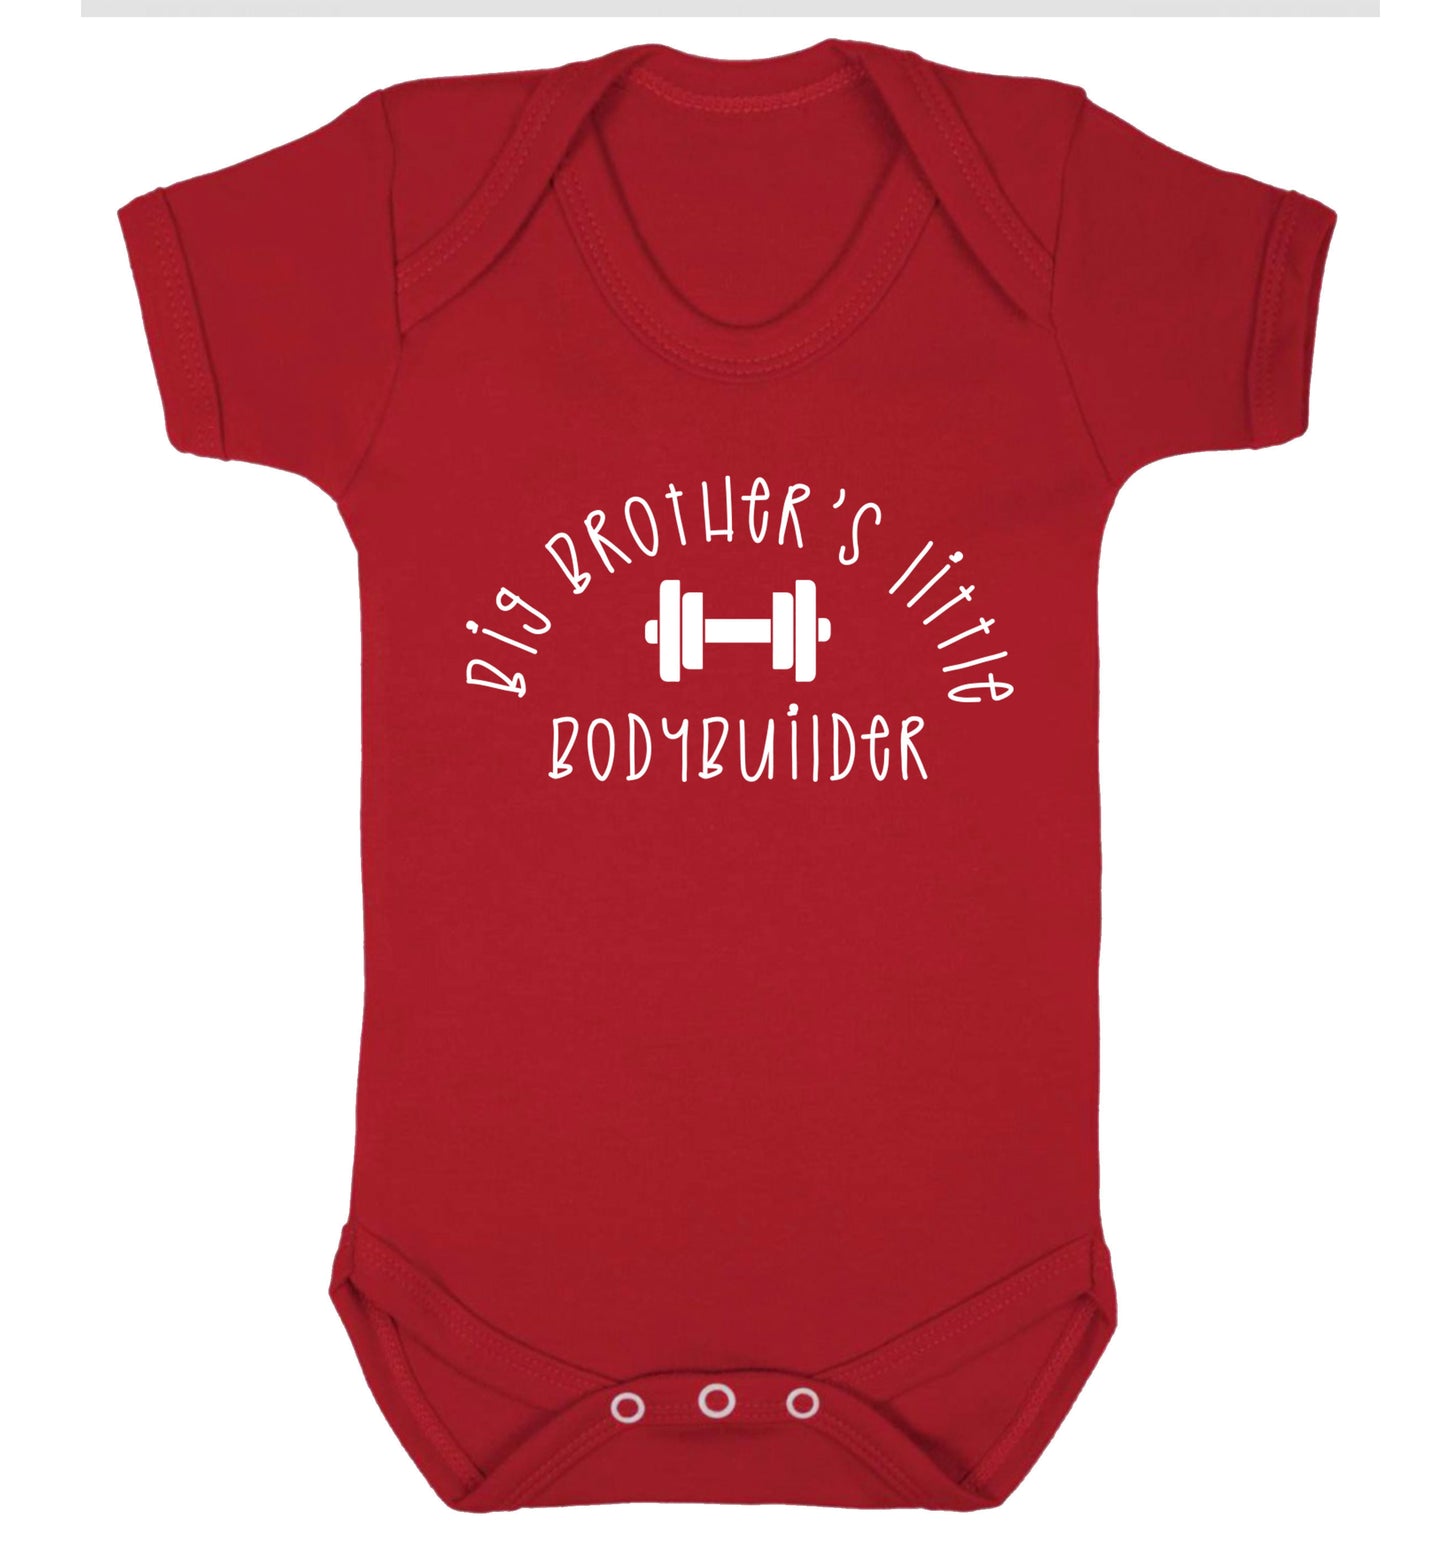 Big brother's little bodybuilder Baby Vest red 18-24 months